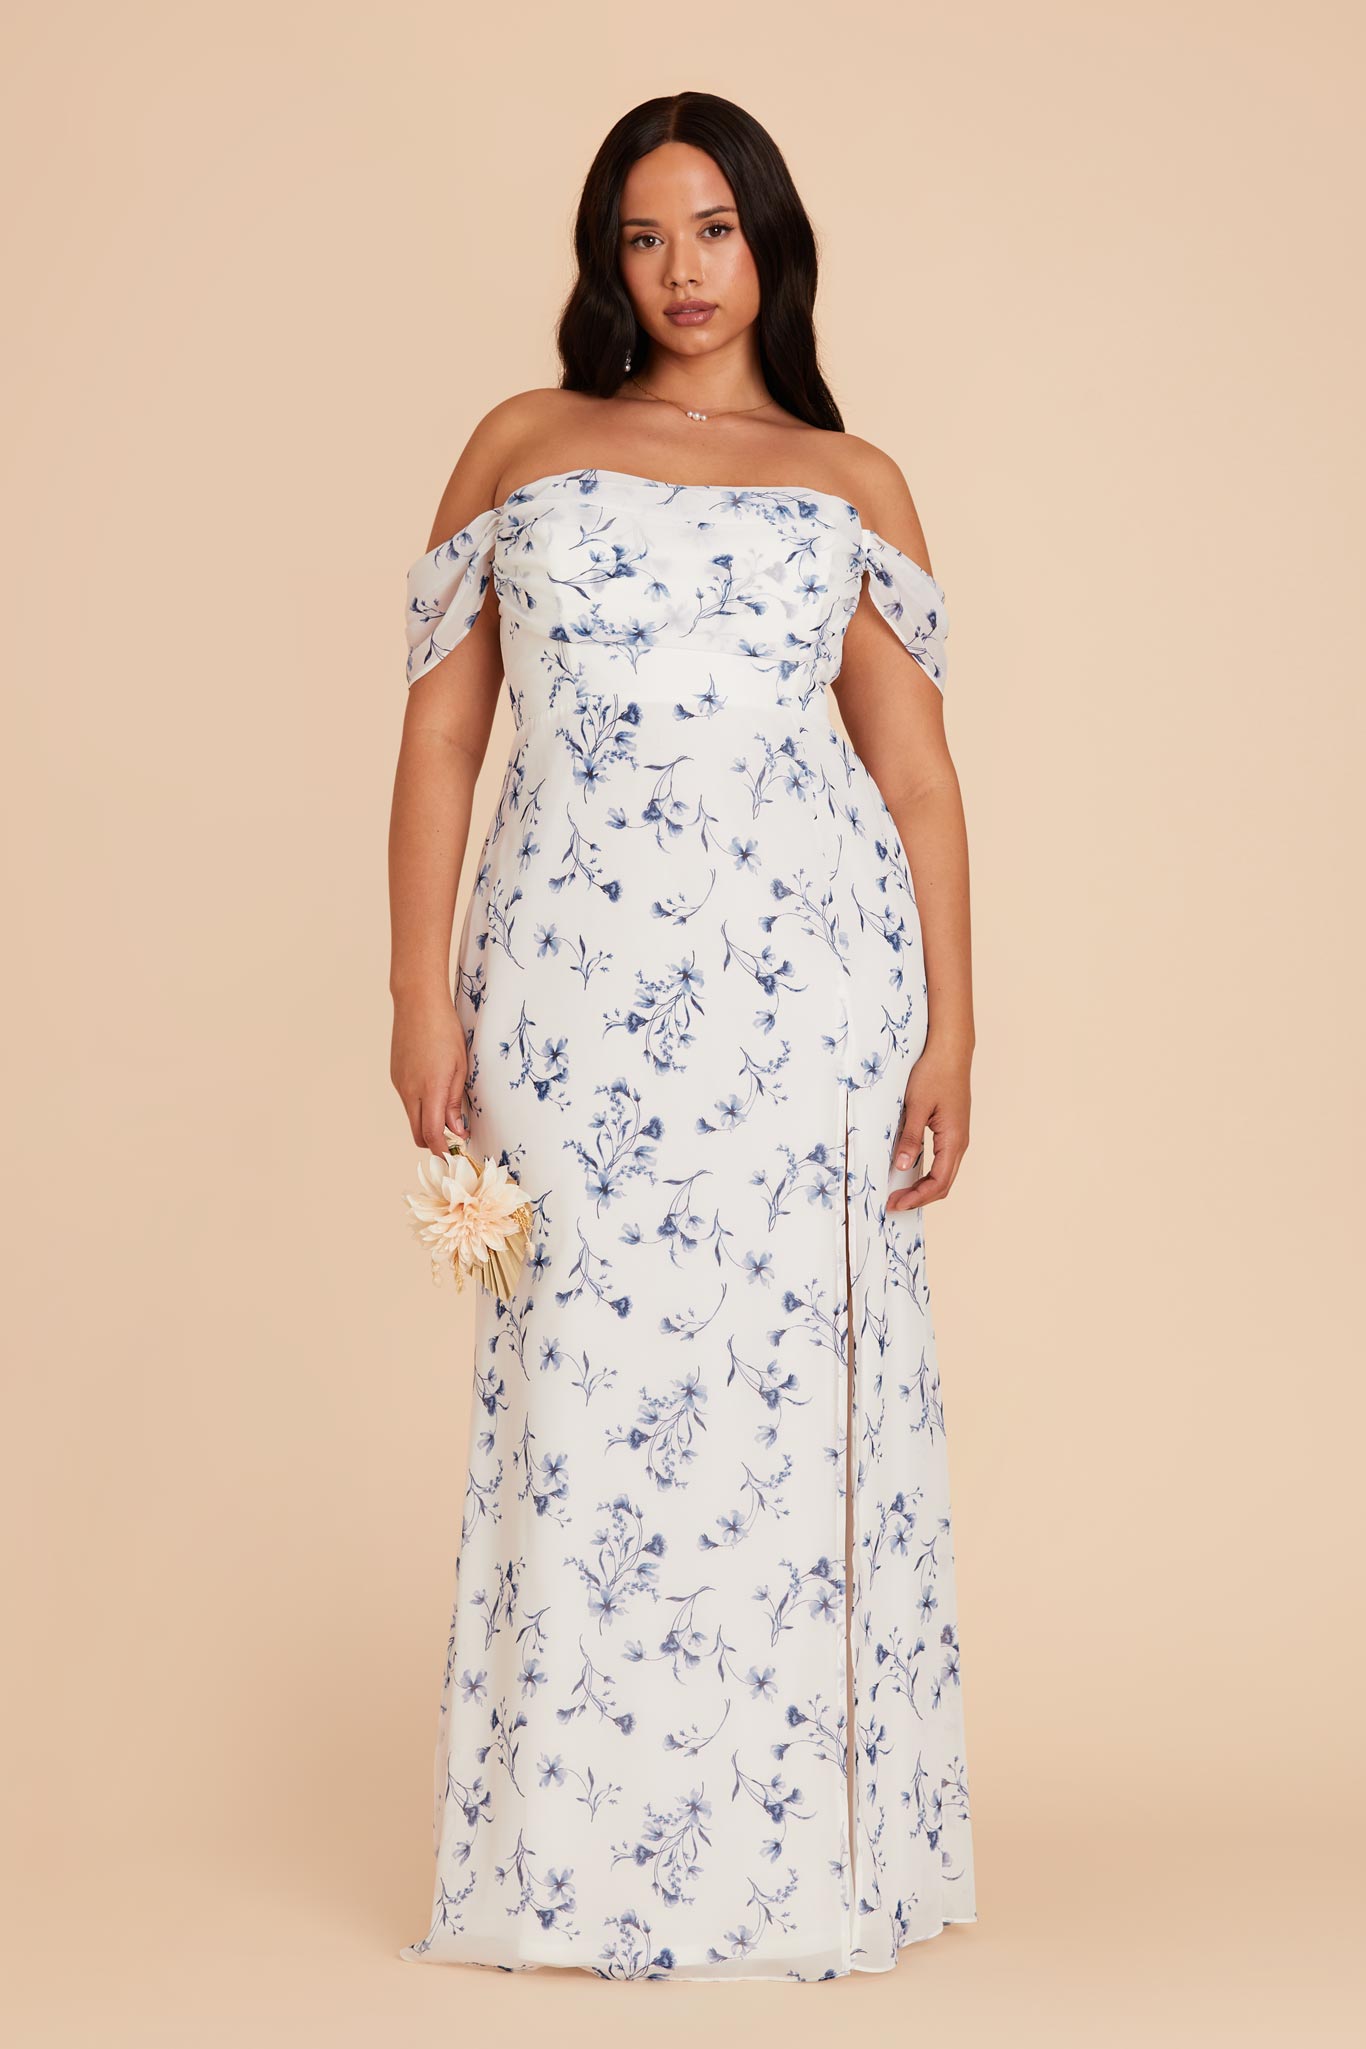 Blue Le Fleur Mira Convertible Dress by Birdy Grey